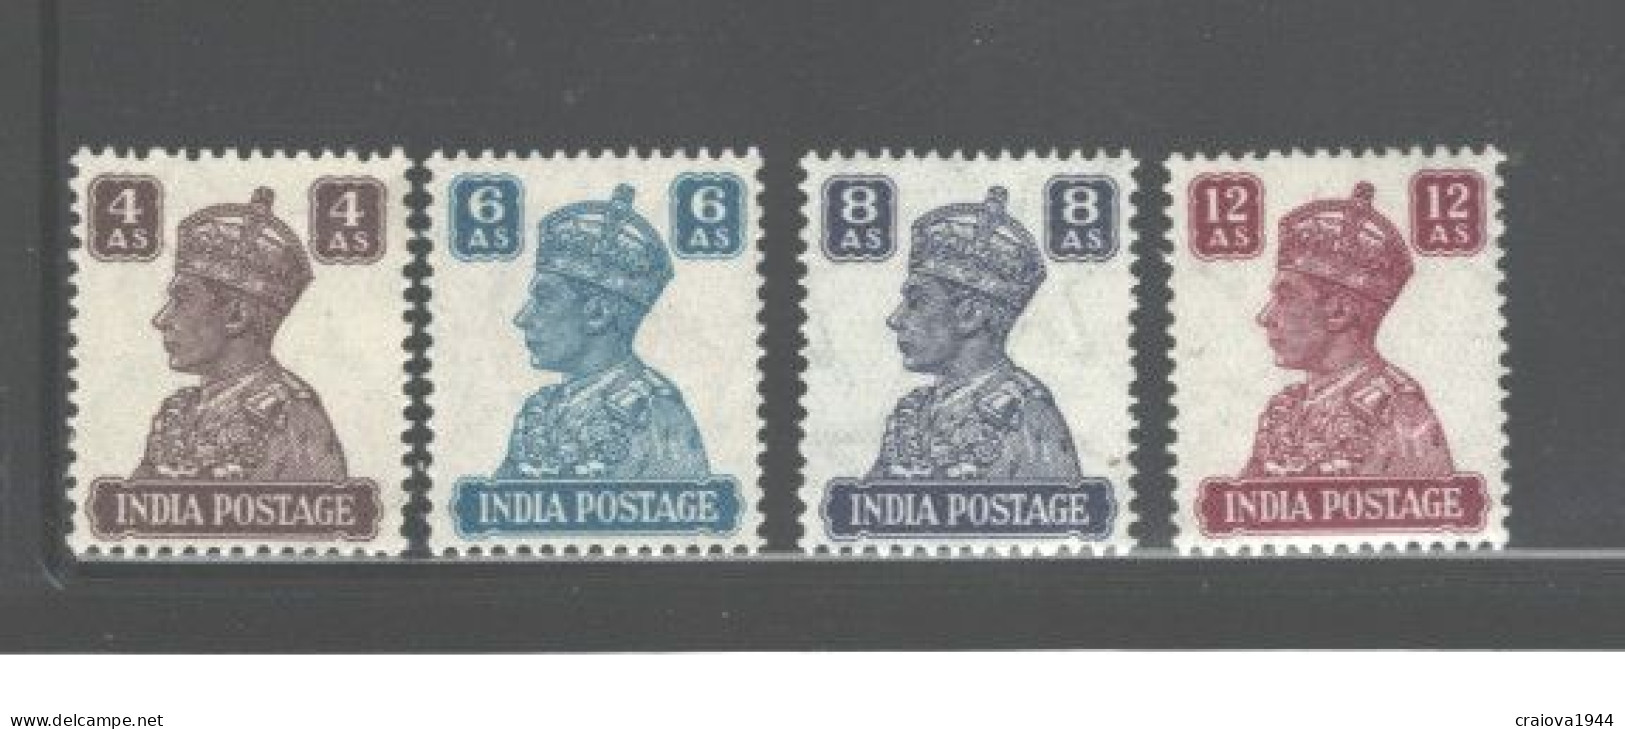 INDIA, 1941 - 1943 "GEORGE VI" MH #168 -179 - Ongebruikt